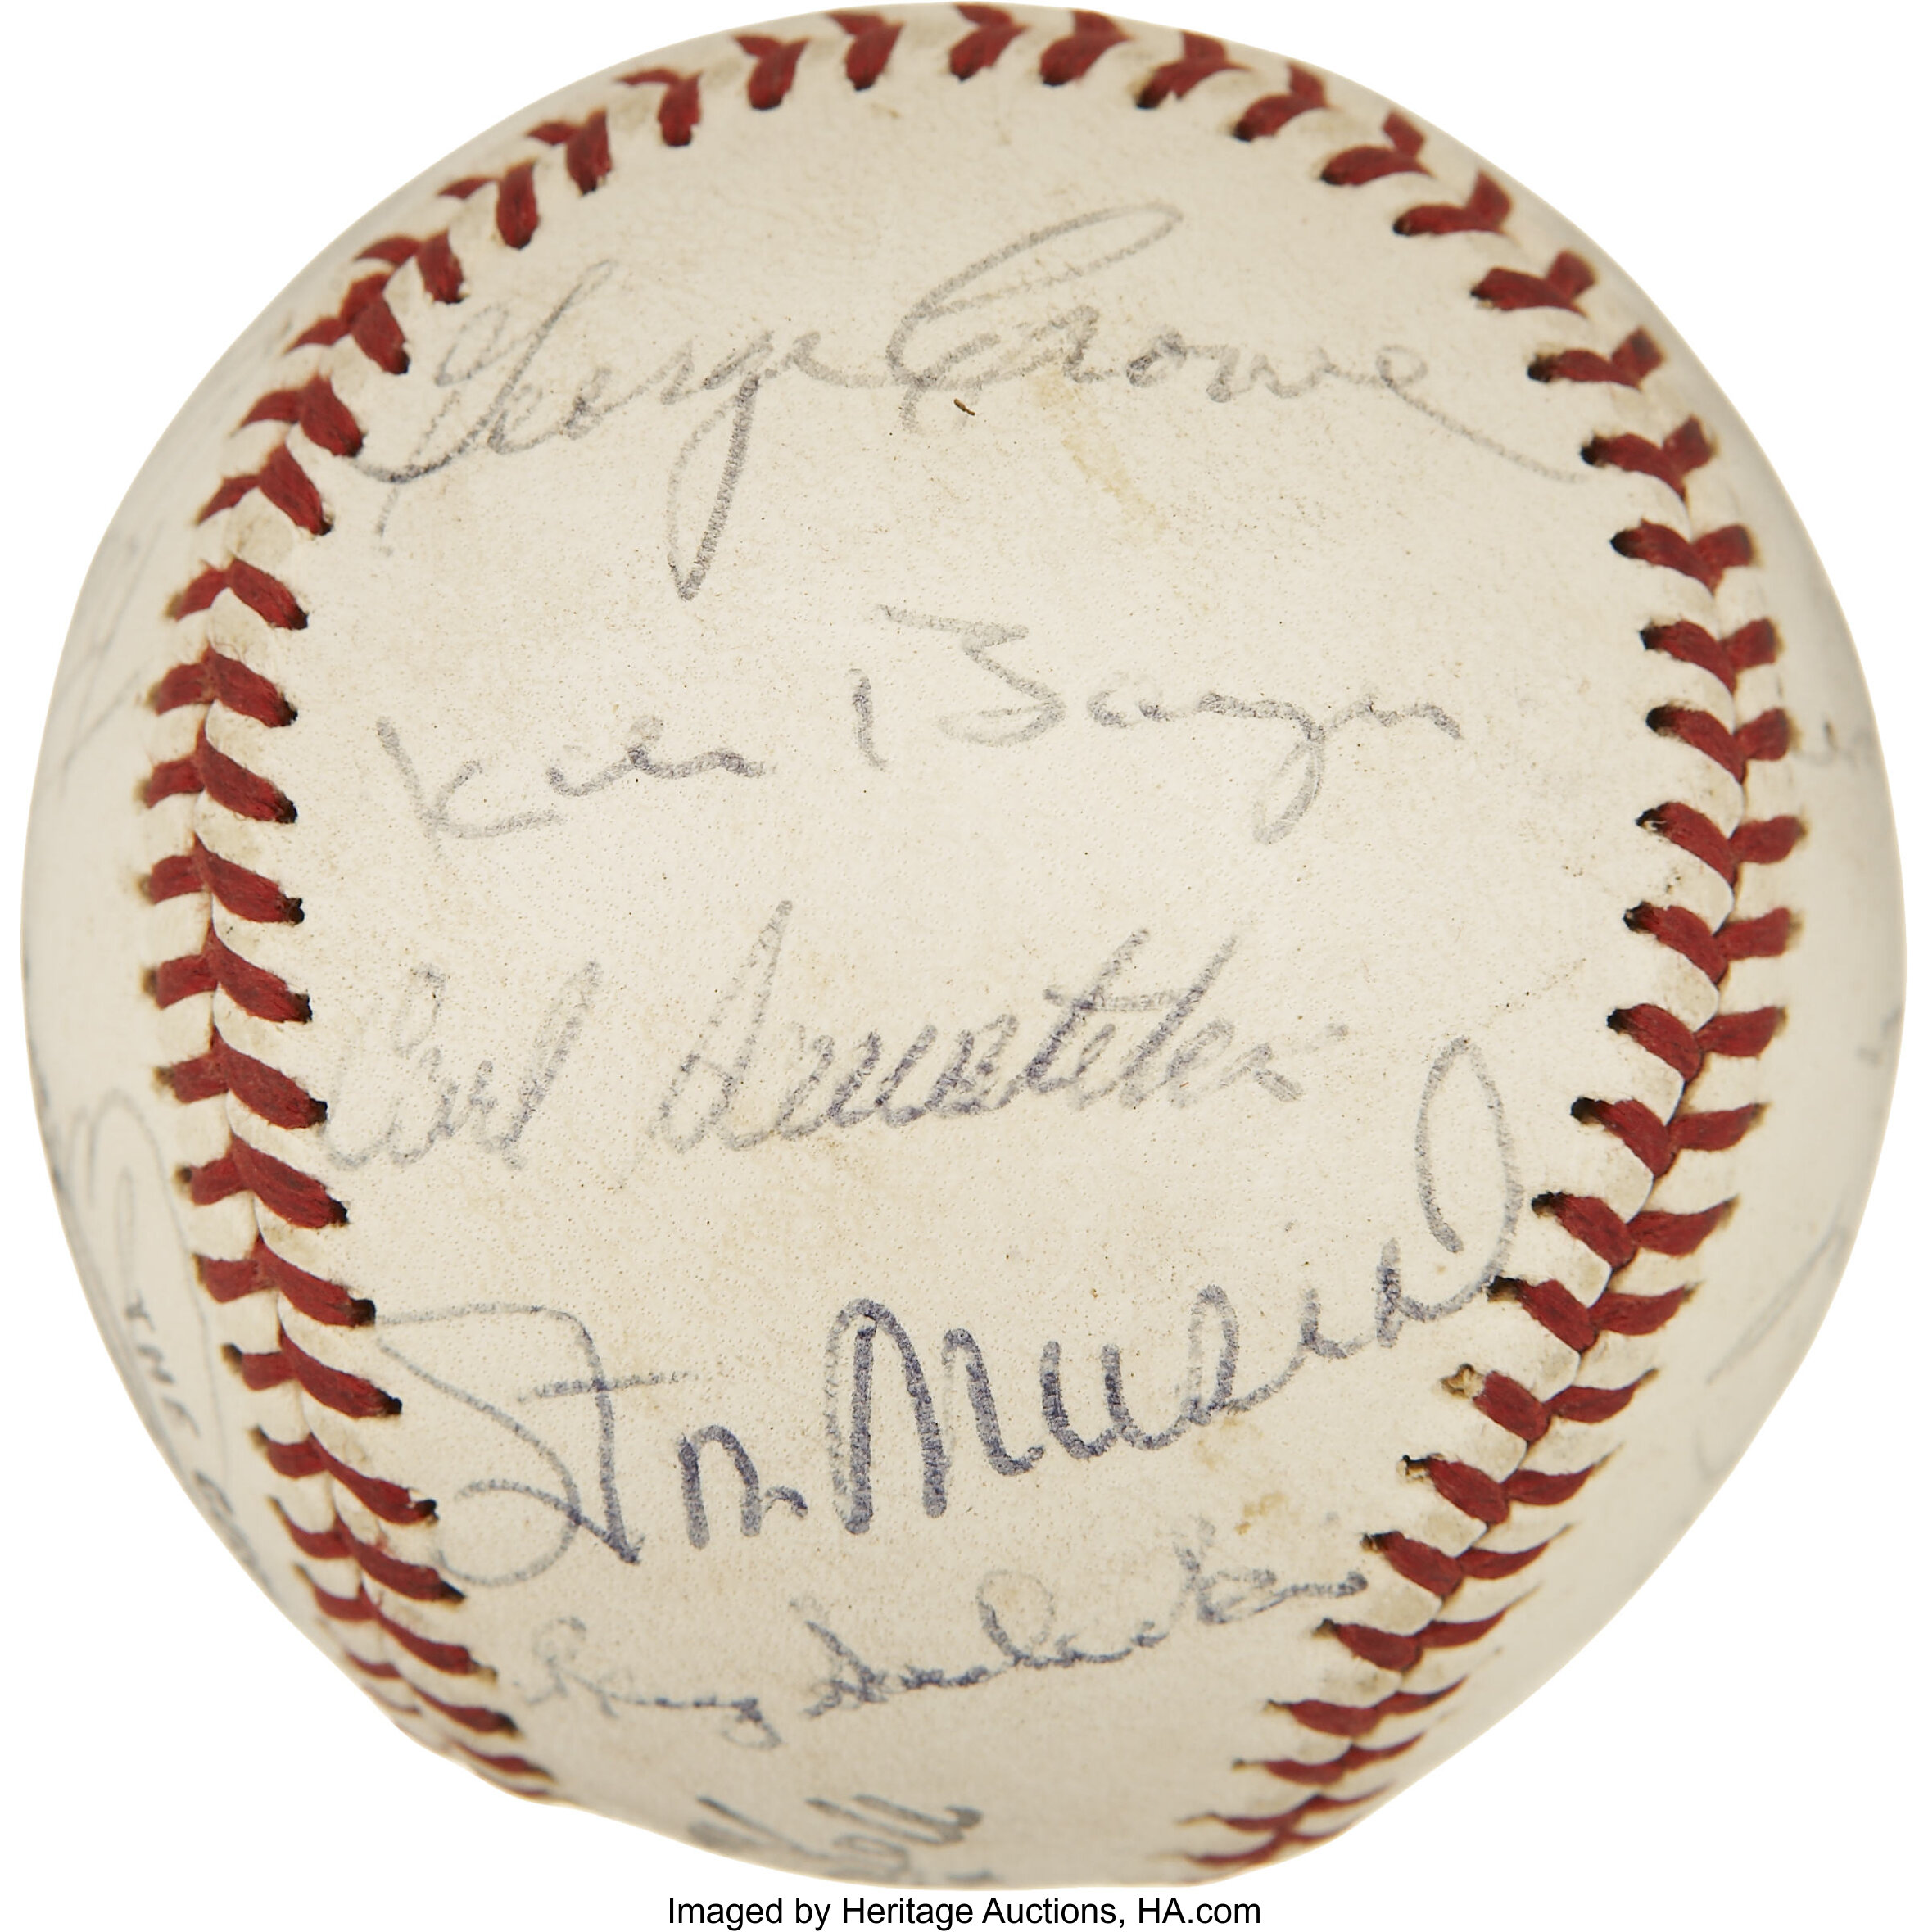 Stan Musial Autograph / Signed Baseball St. Louis Cardinals 24 X